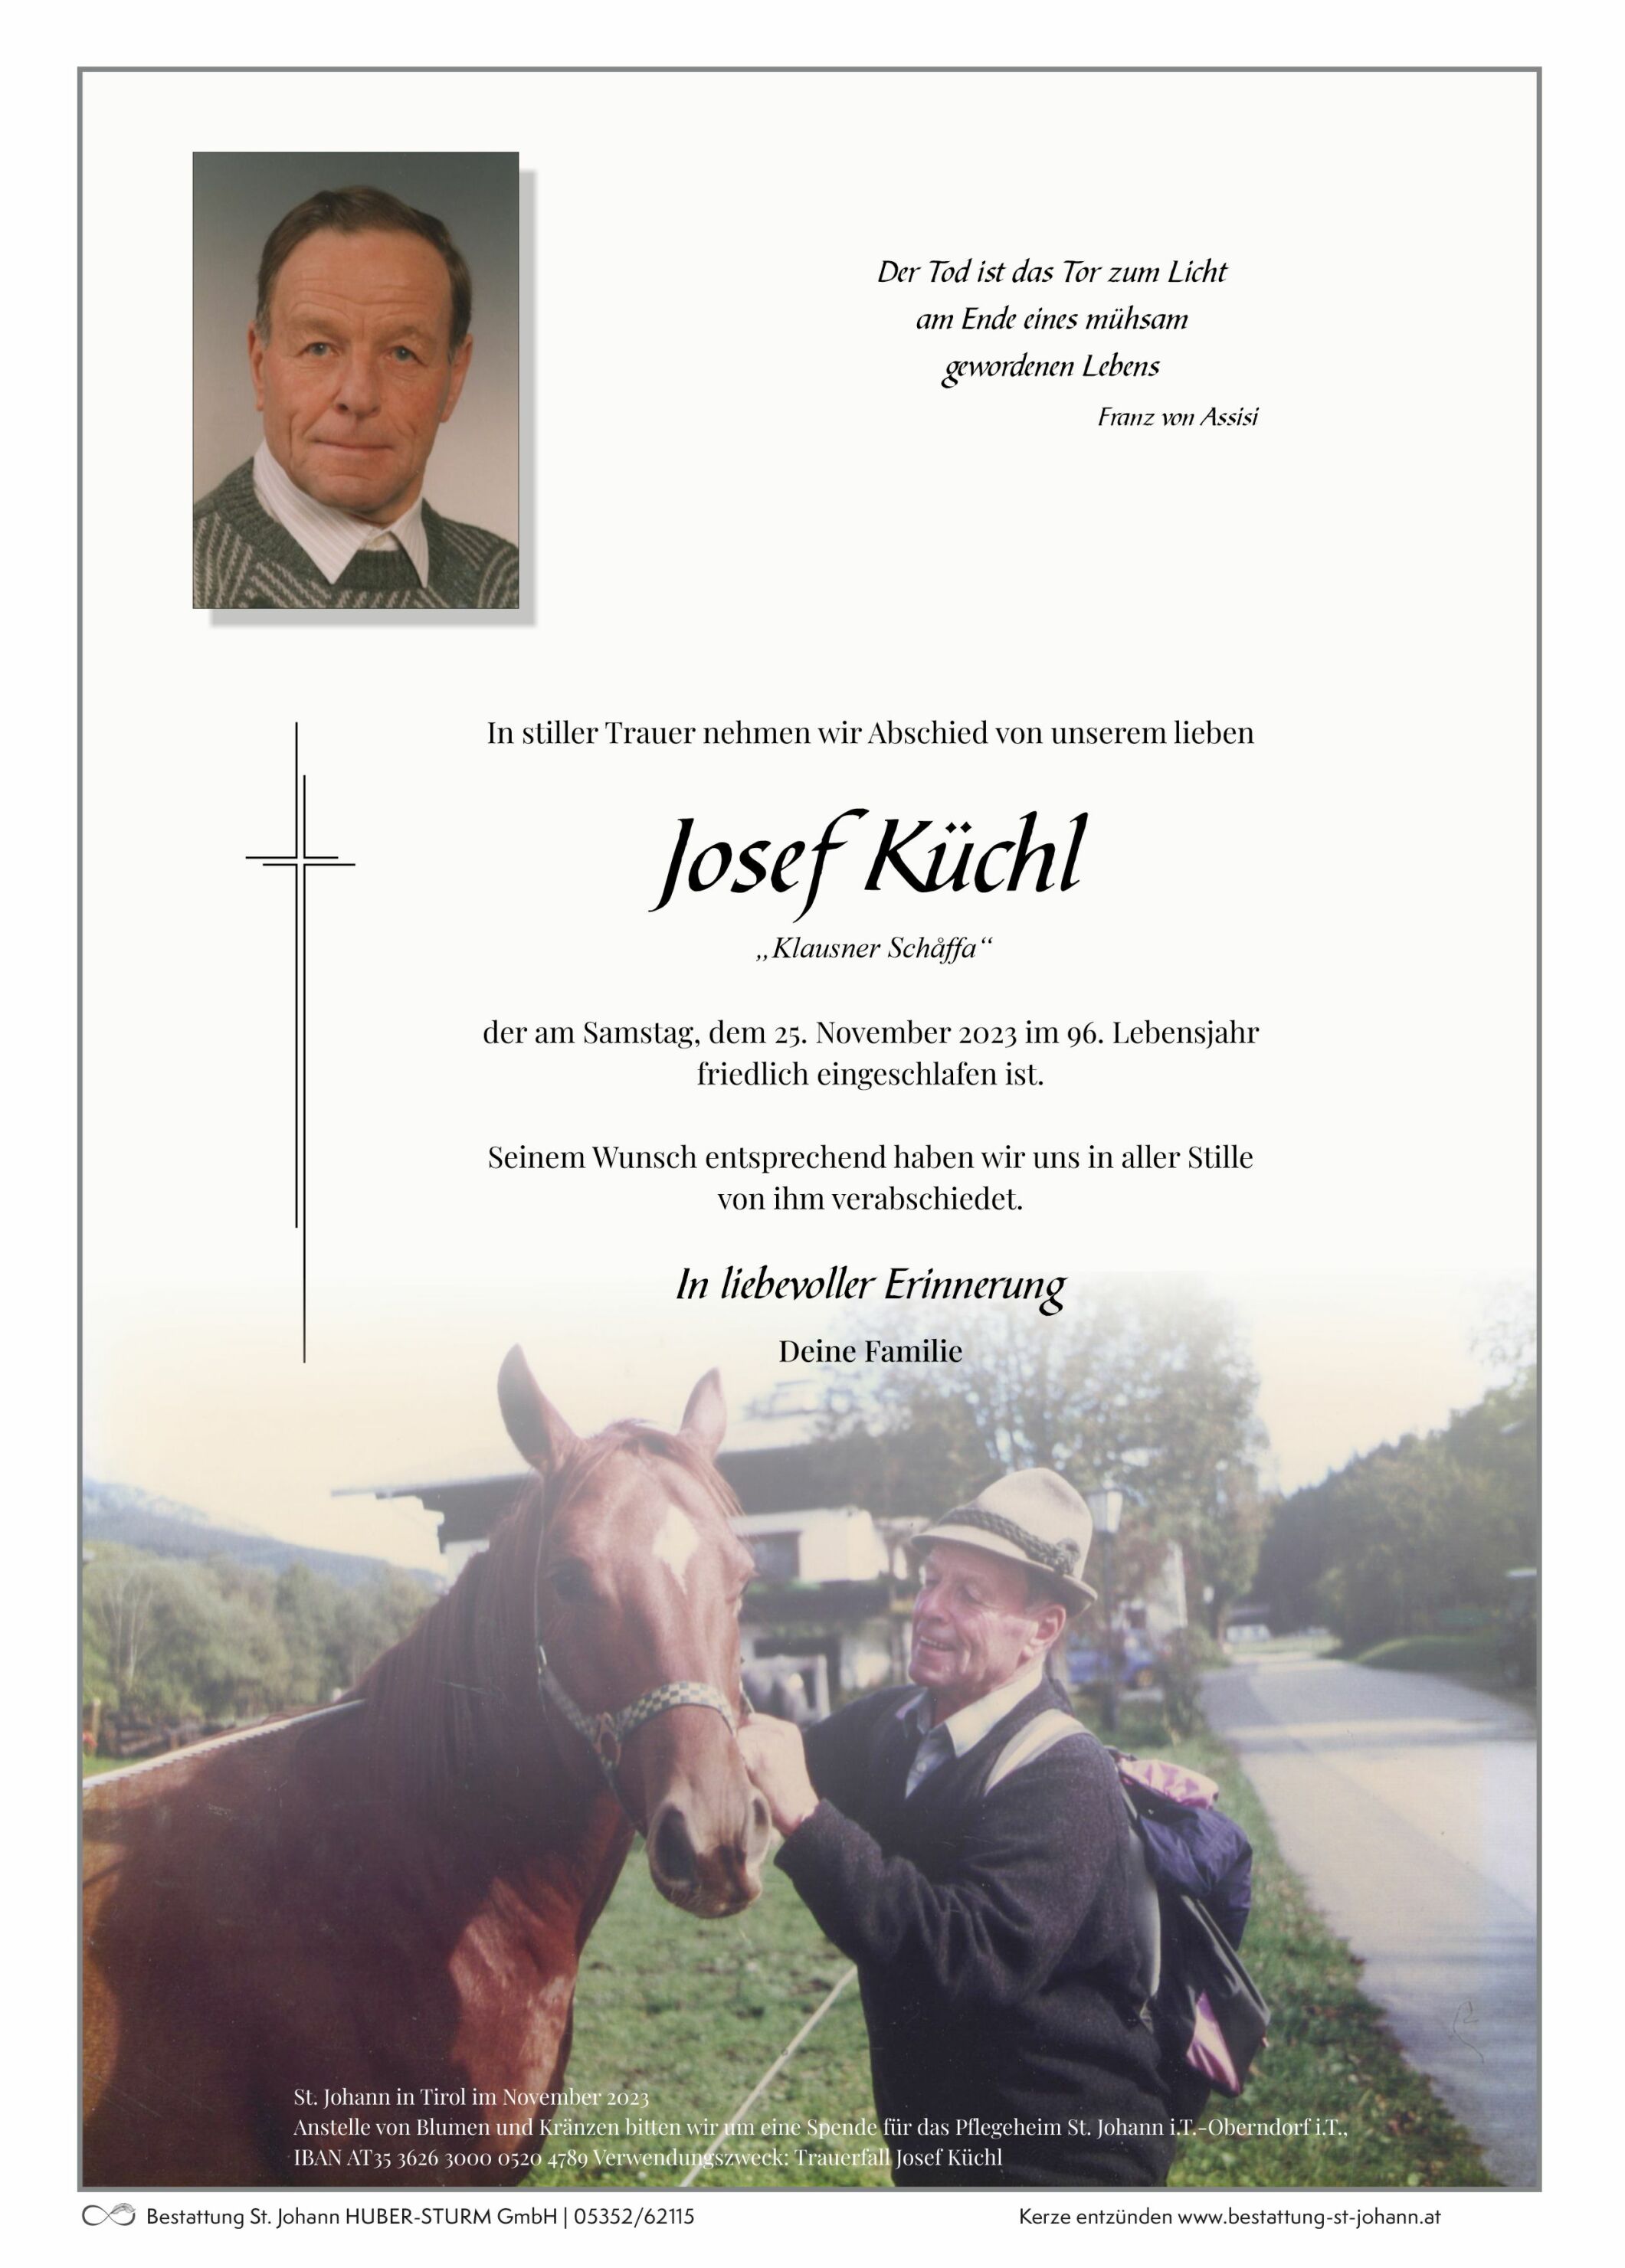 Josef Küchl